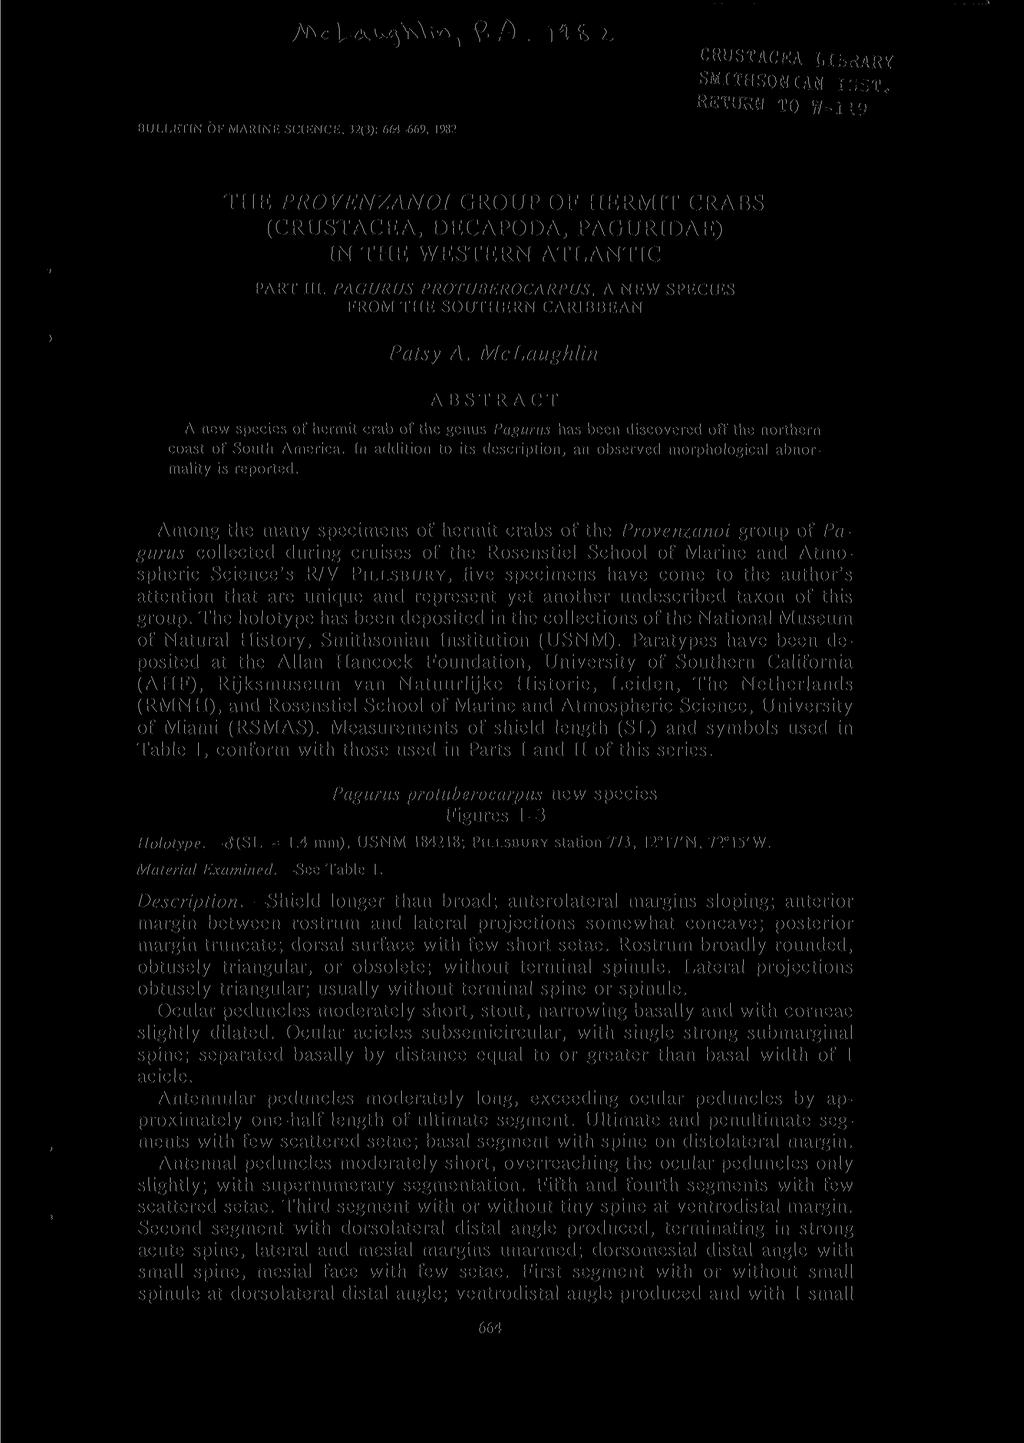 A v Uxuc^VXiA 4. i H i BULLETIN OF MARINE SCIENCE, 32(3): 664-669, 1982 CRUSTACEA LIBRARY SMITHSONIAN RETUKIi TO W-.